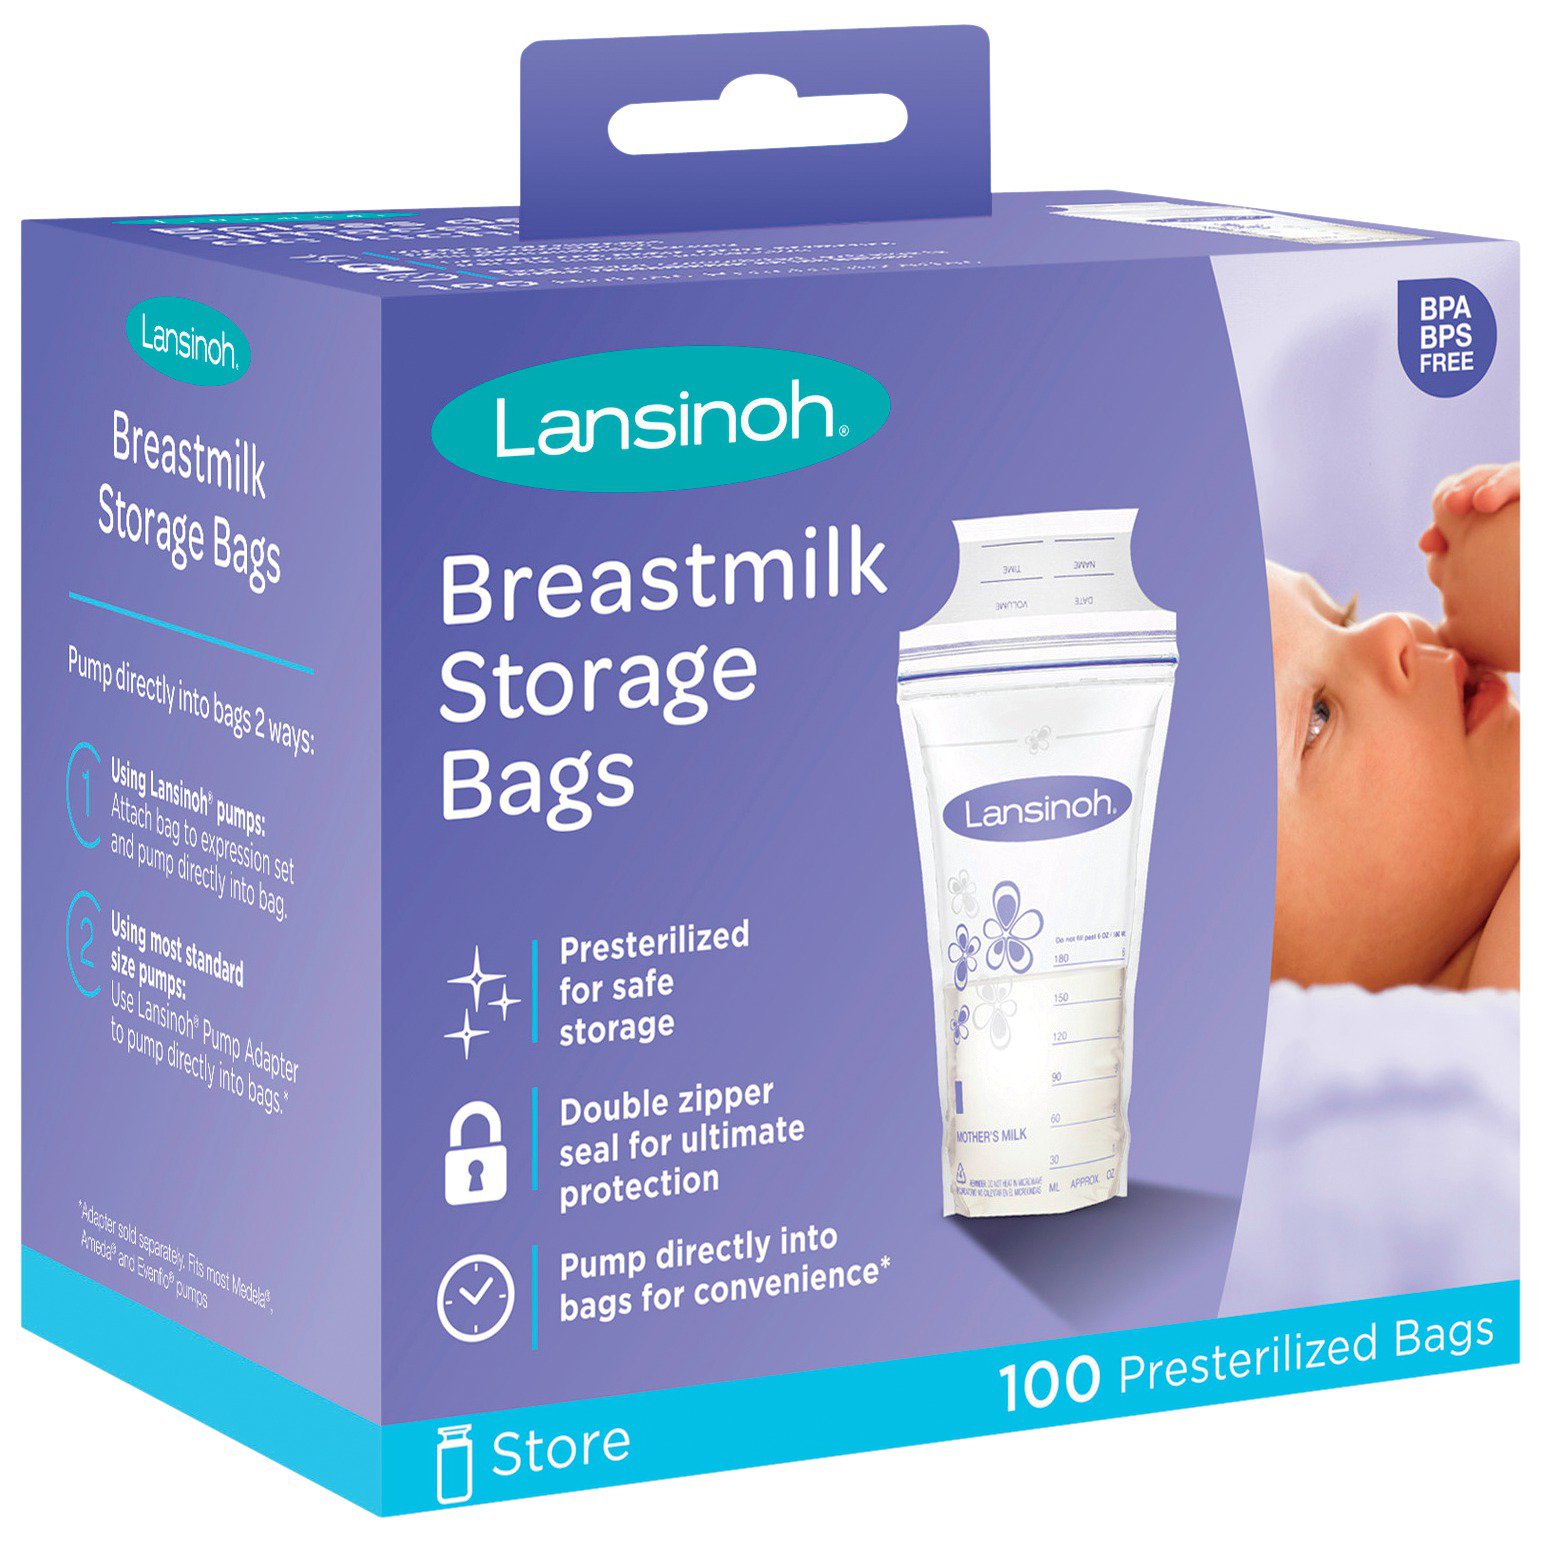 Evenflo Advanced Breast Milk Storage Bags